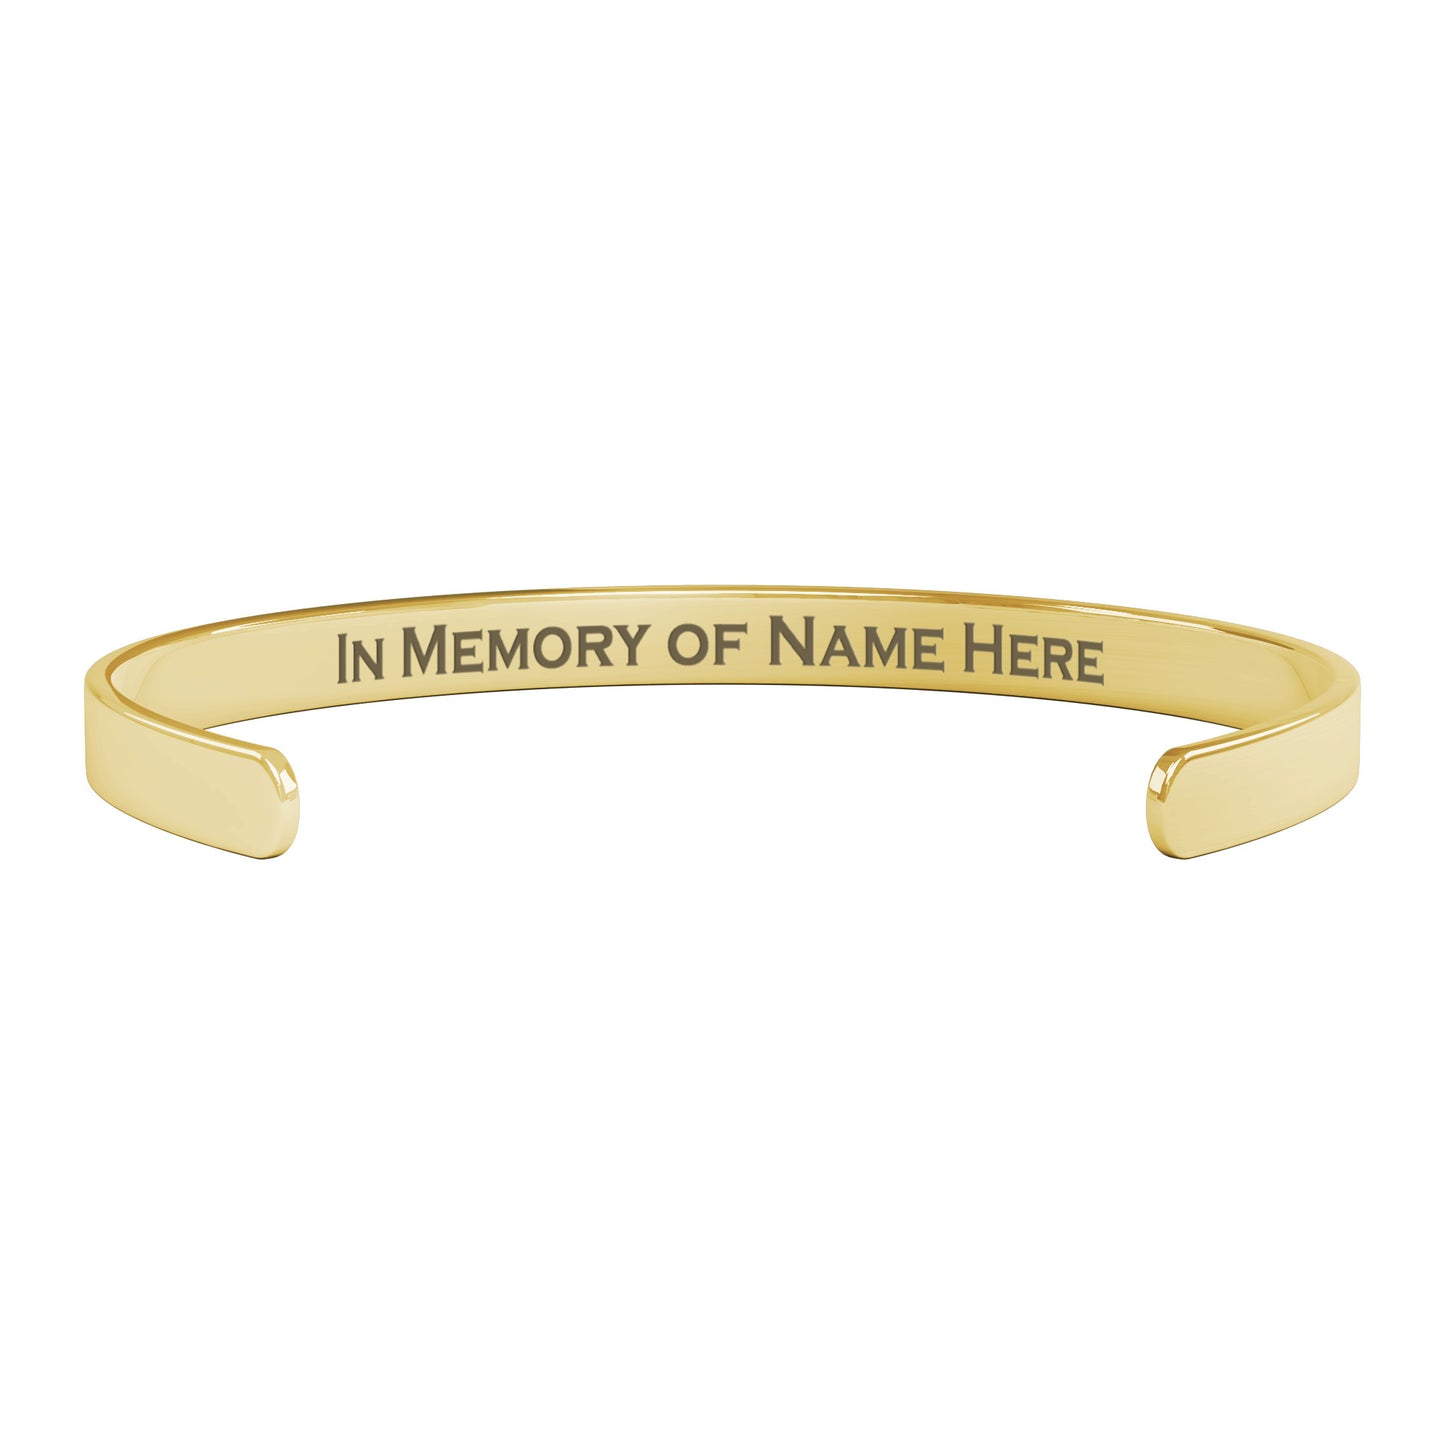 Personalized Gallbladder Cancer Awareness Cuff Bracelet